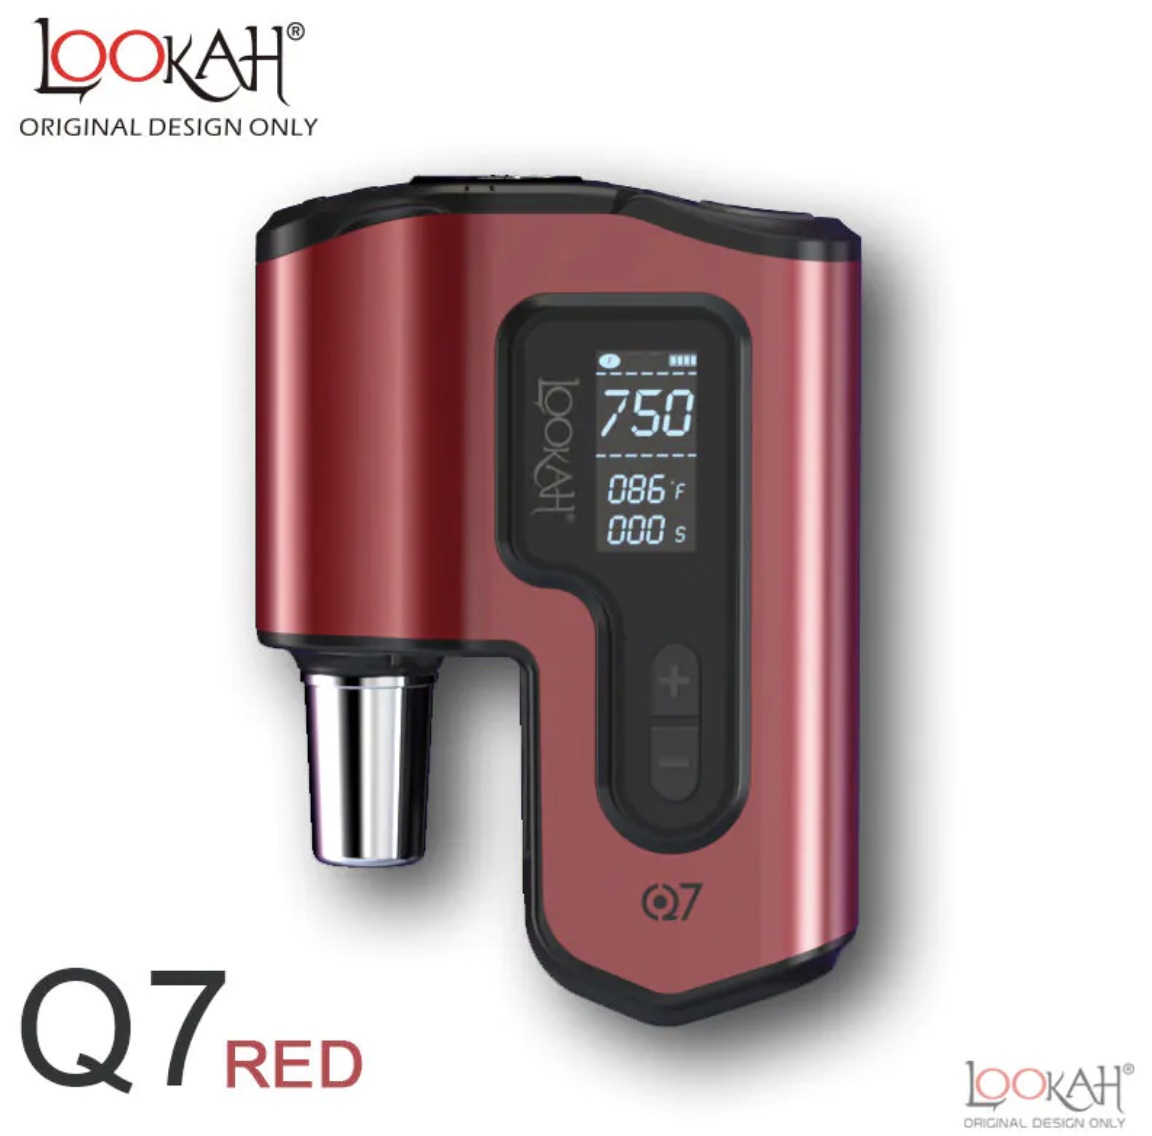 Lookah Q7 E-Banger Red